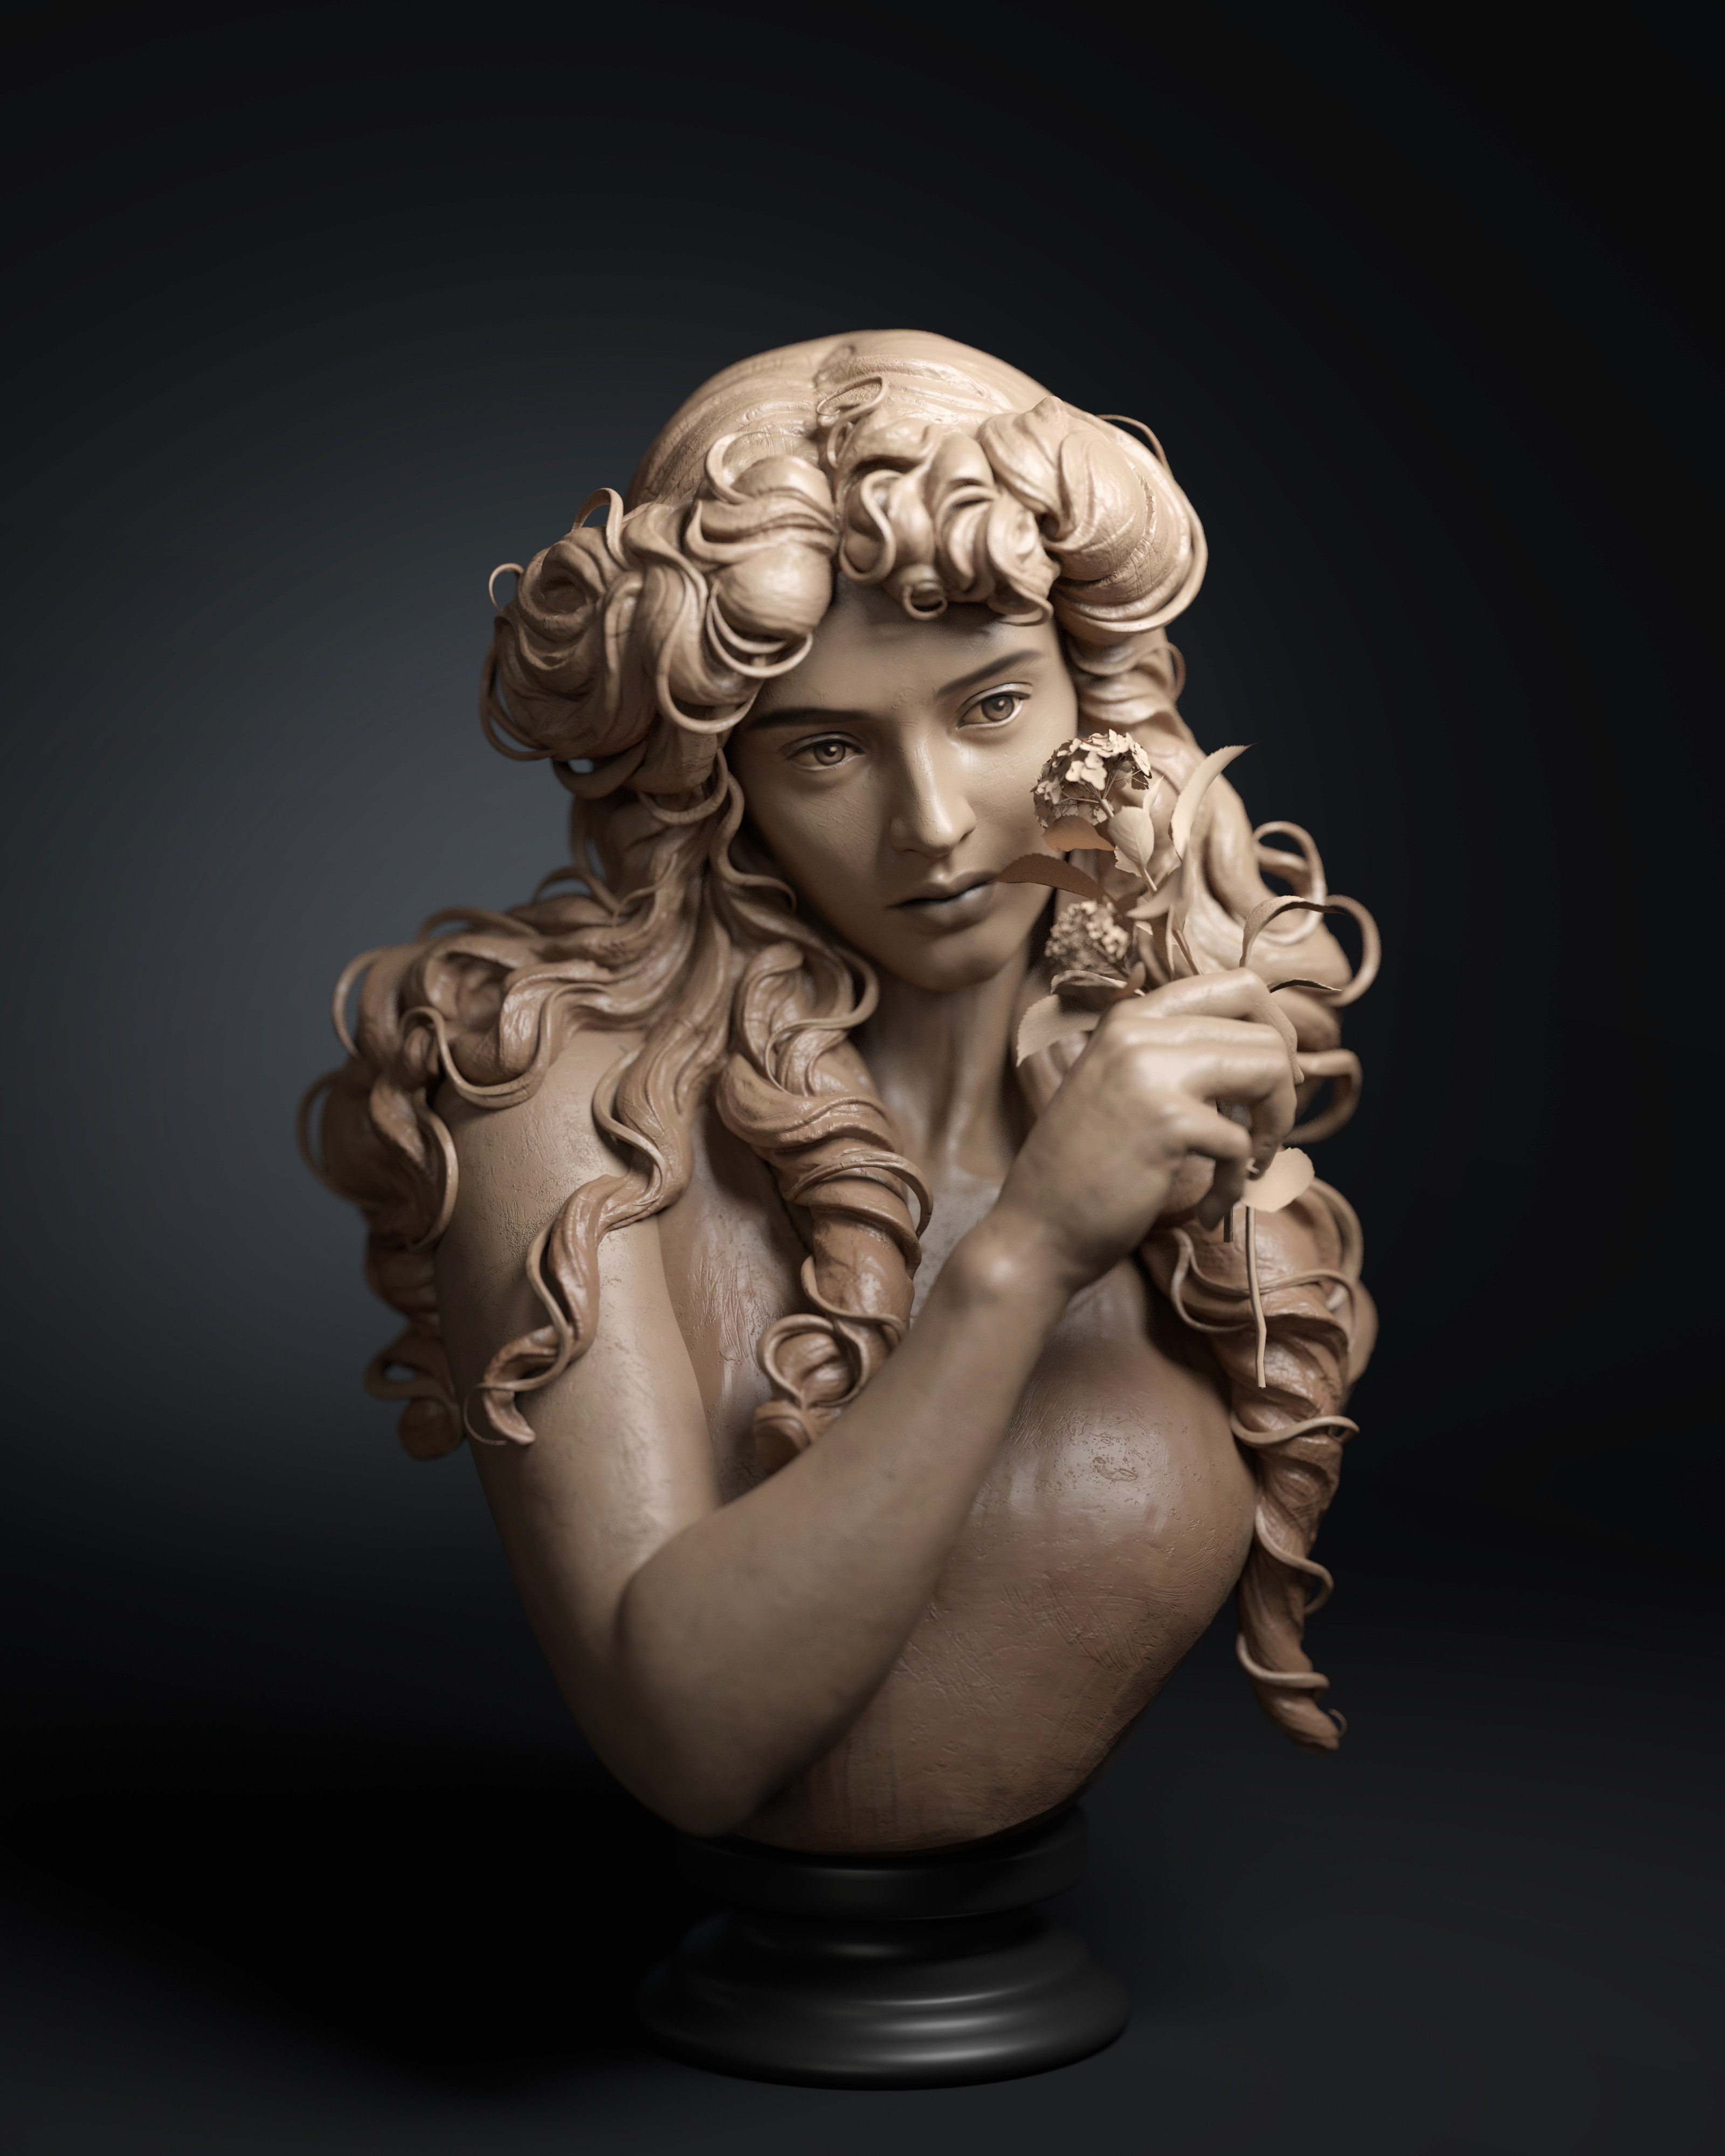 General 3200x4000 artwork digital art bust women simple background minimalism statue flowers long hair